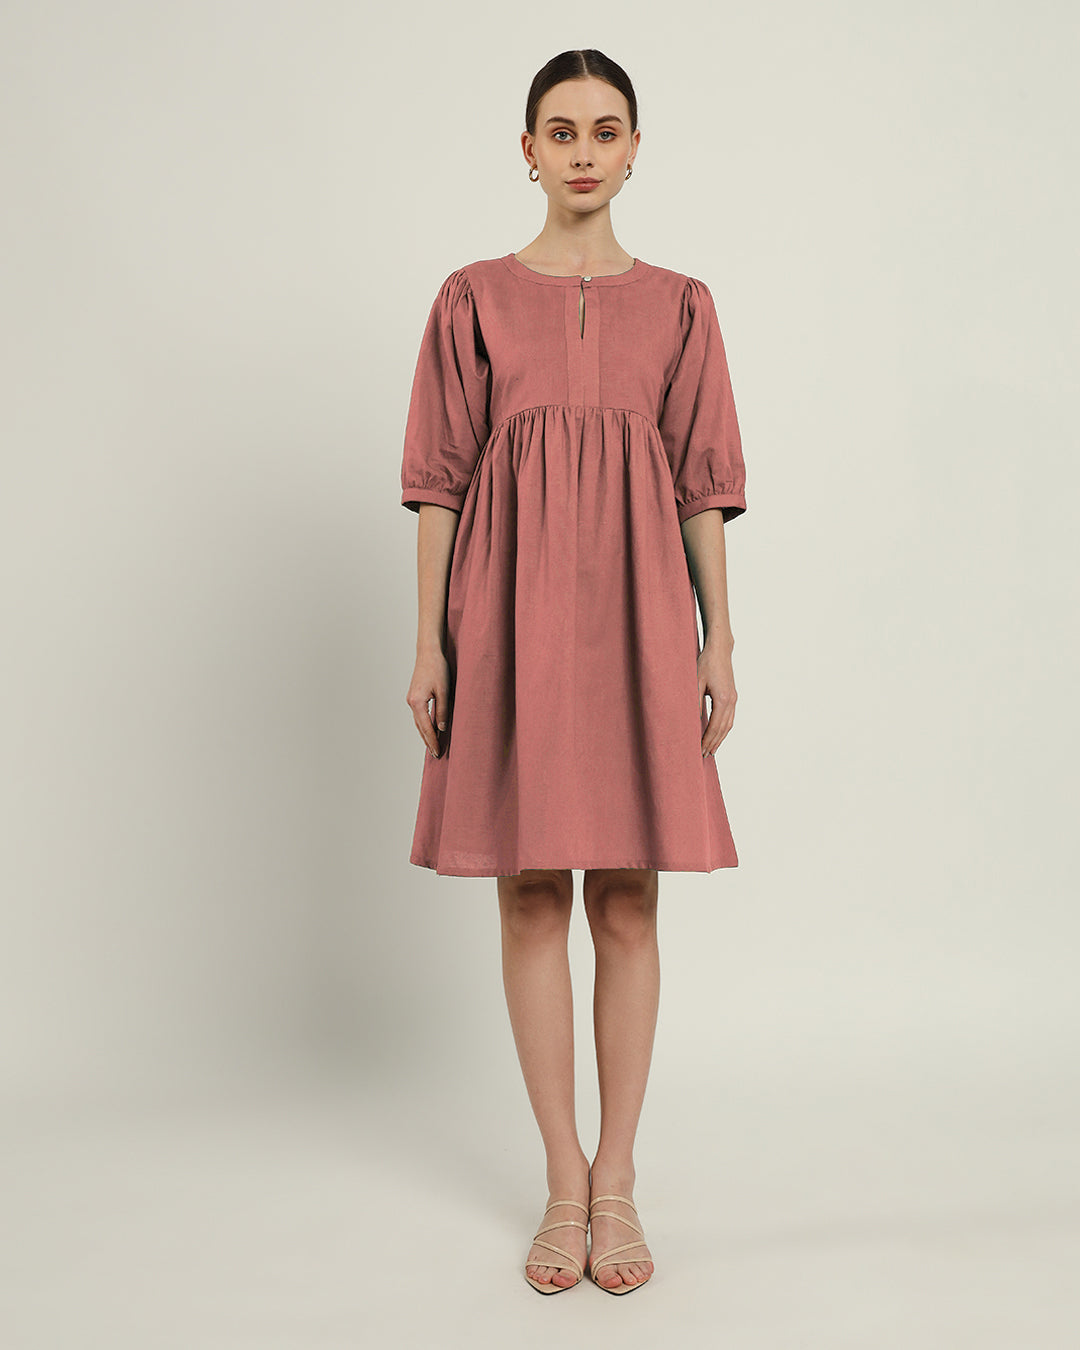 The Aira Ivory Pink Cotton Dress